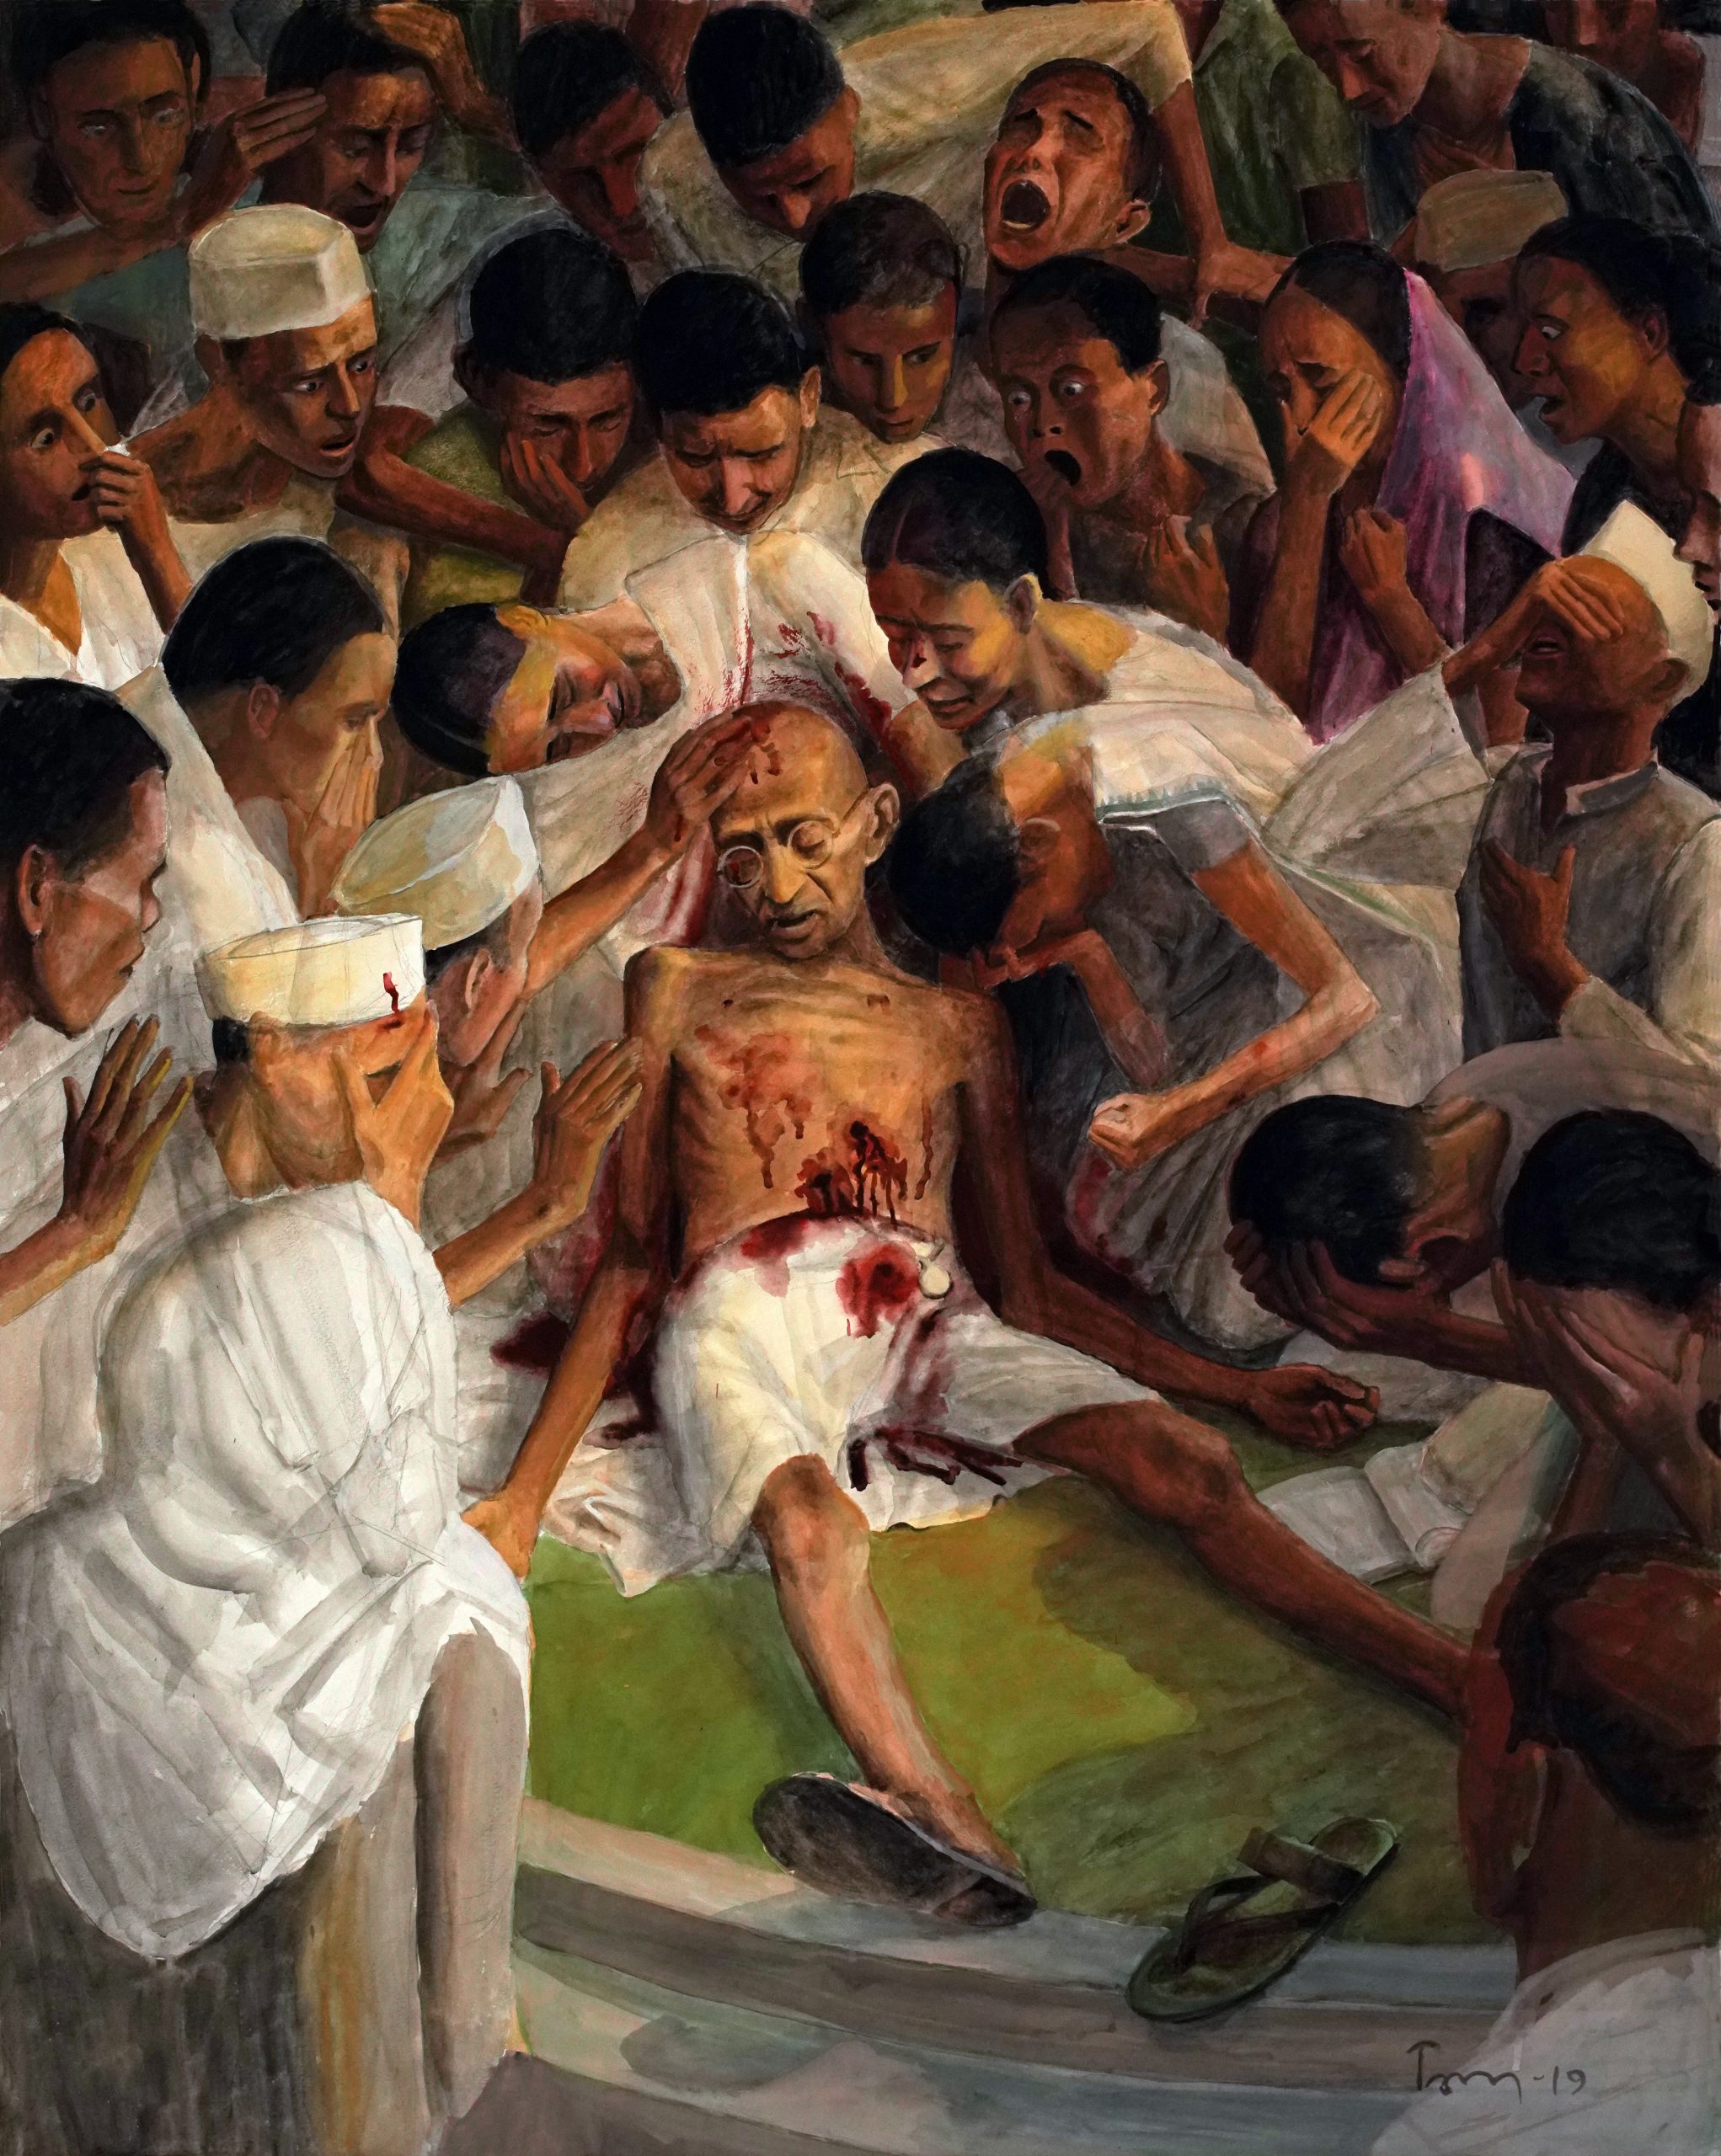 Painting the death of Mahatma Gandhi